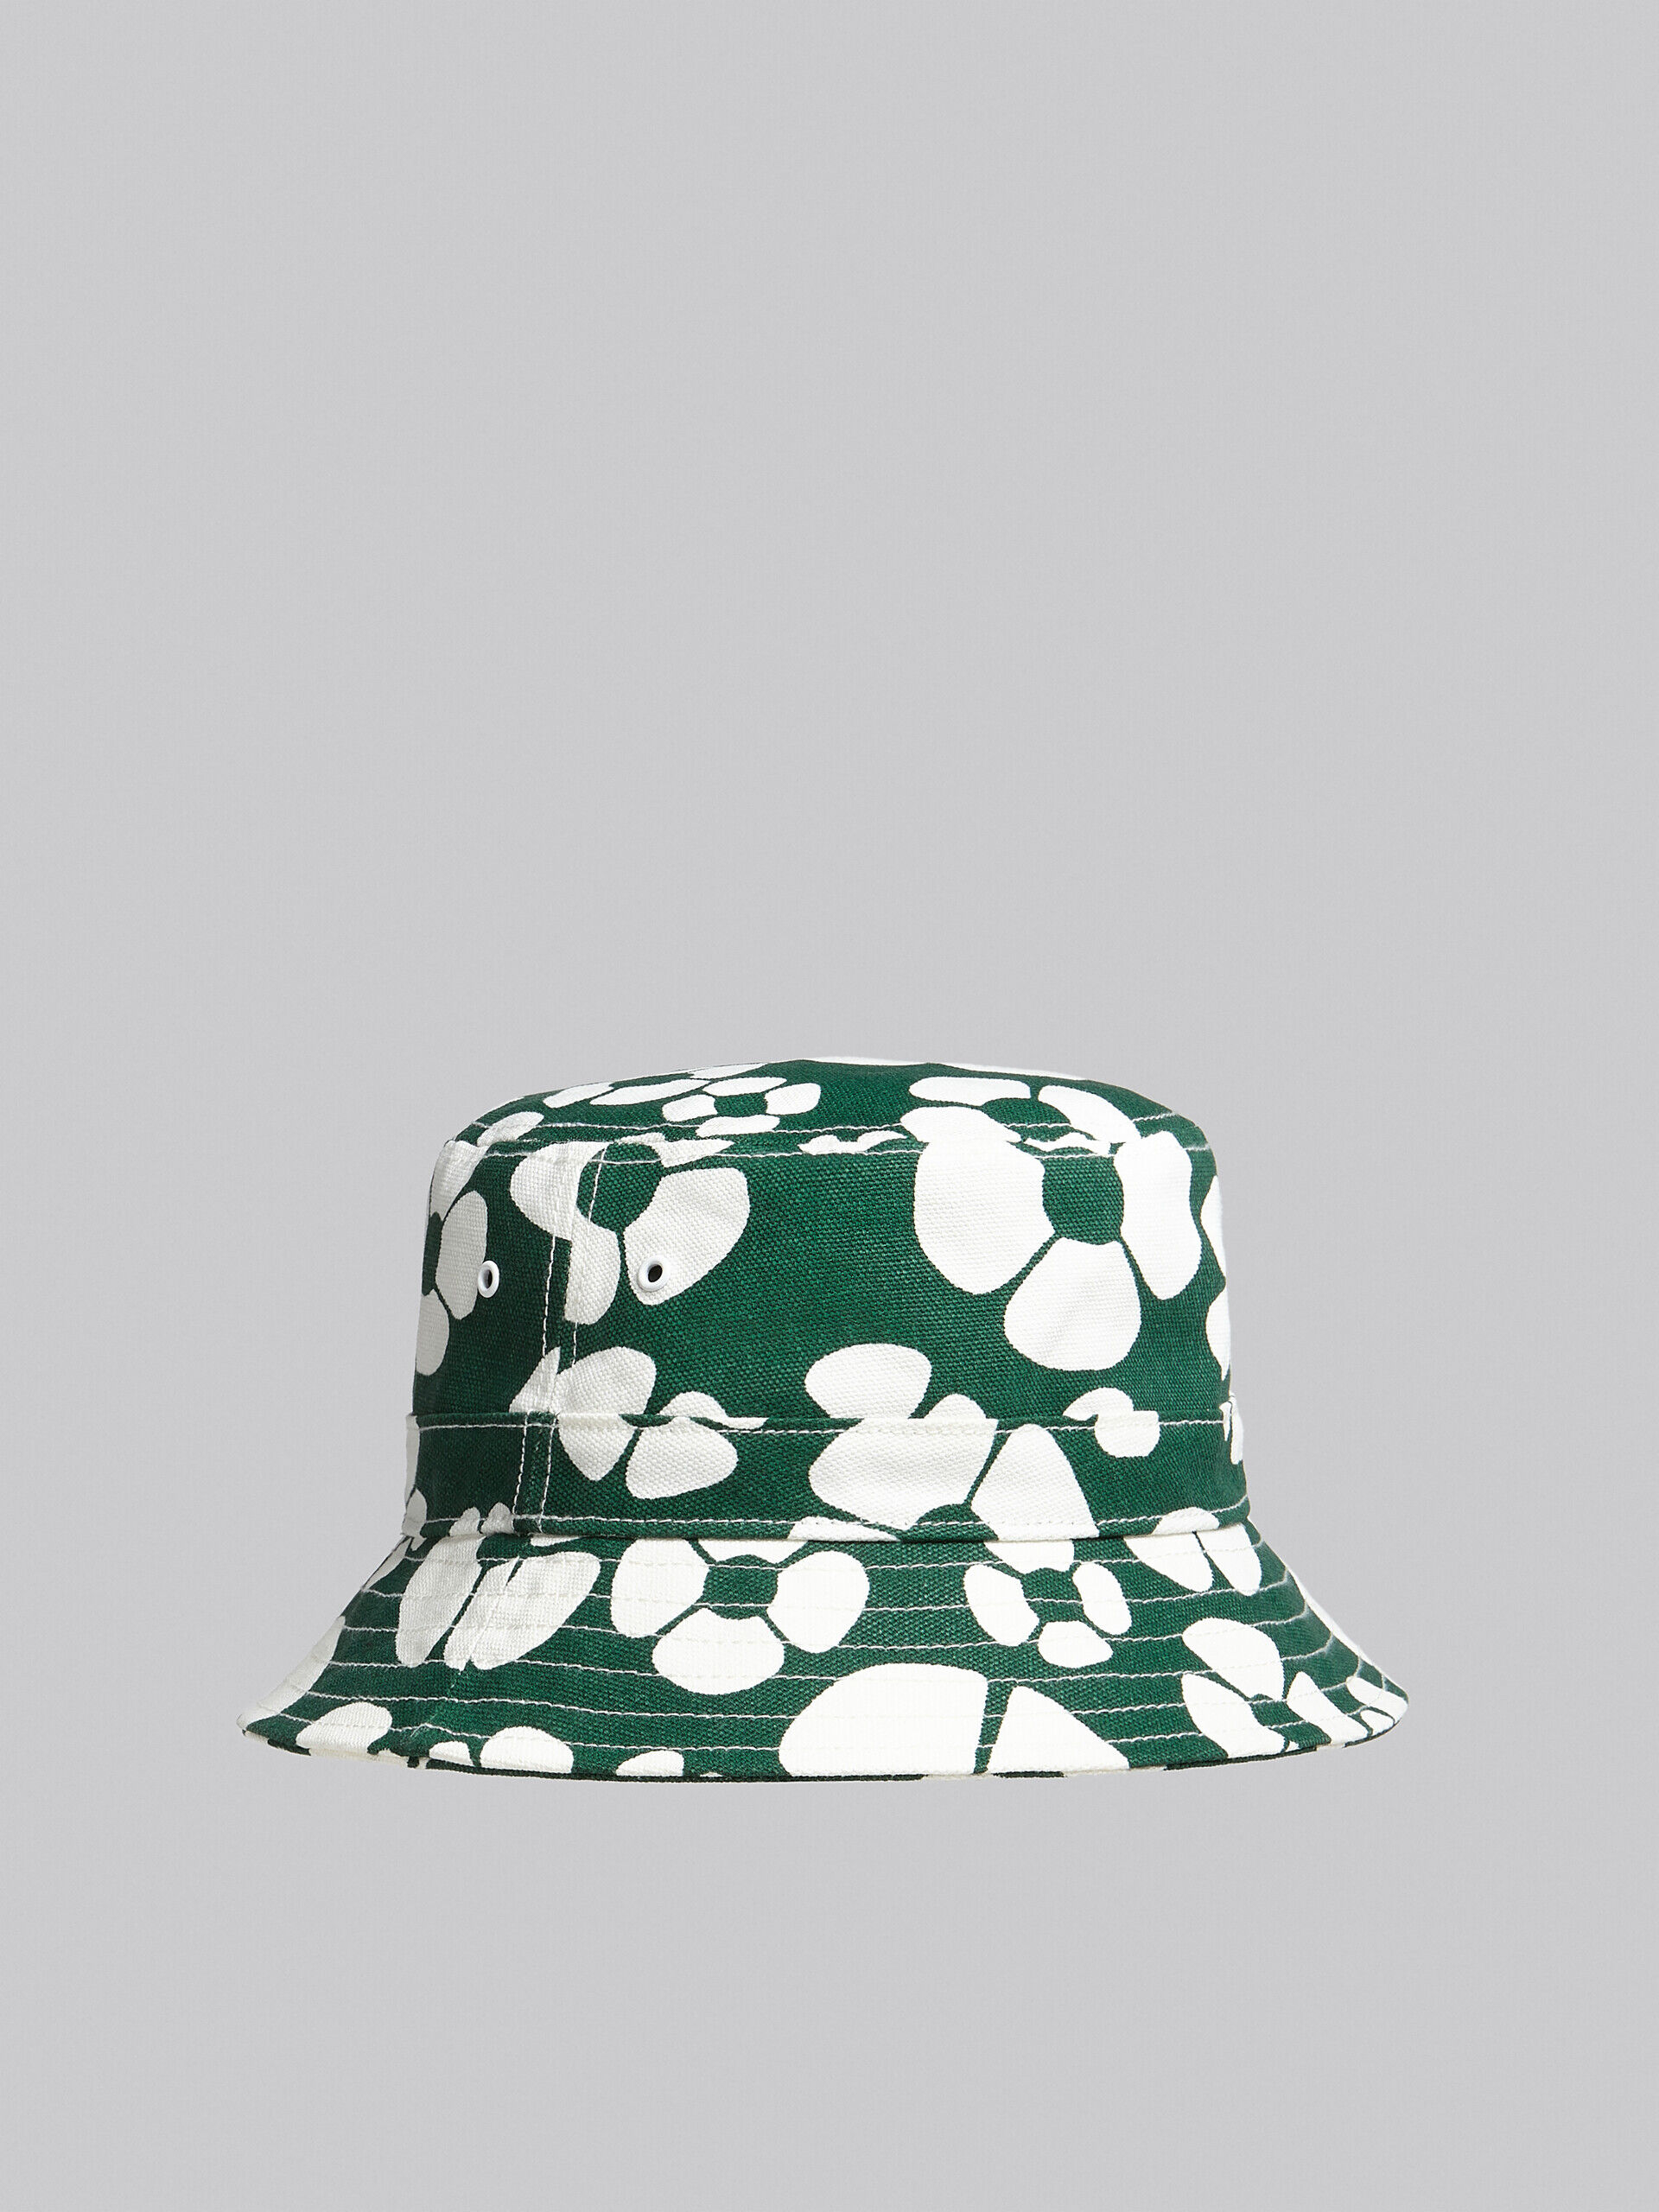 MARNI x CARHARTT WIP - green bucket hat | Marni